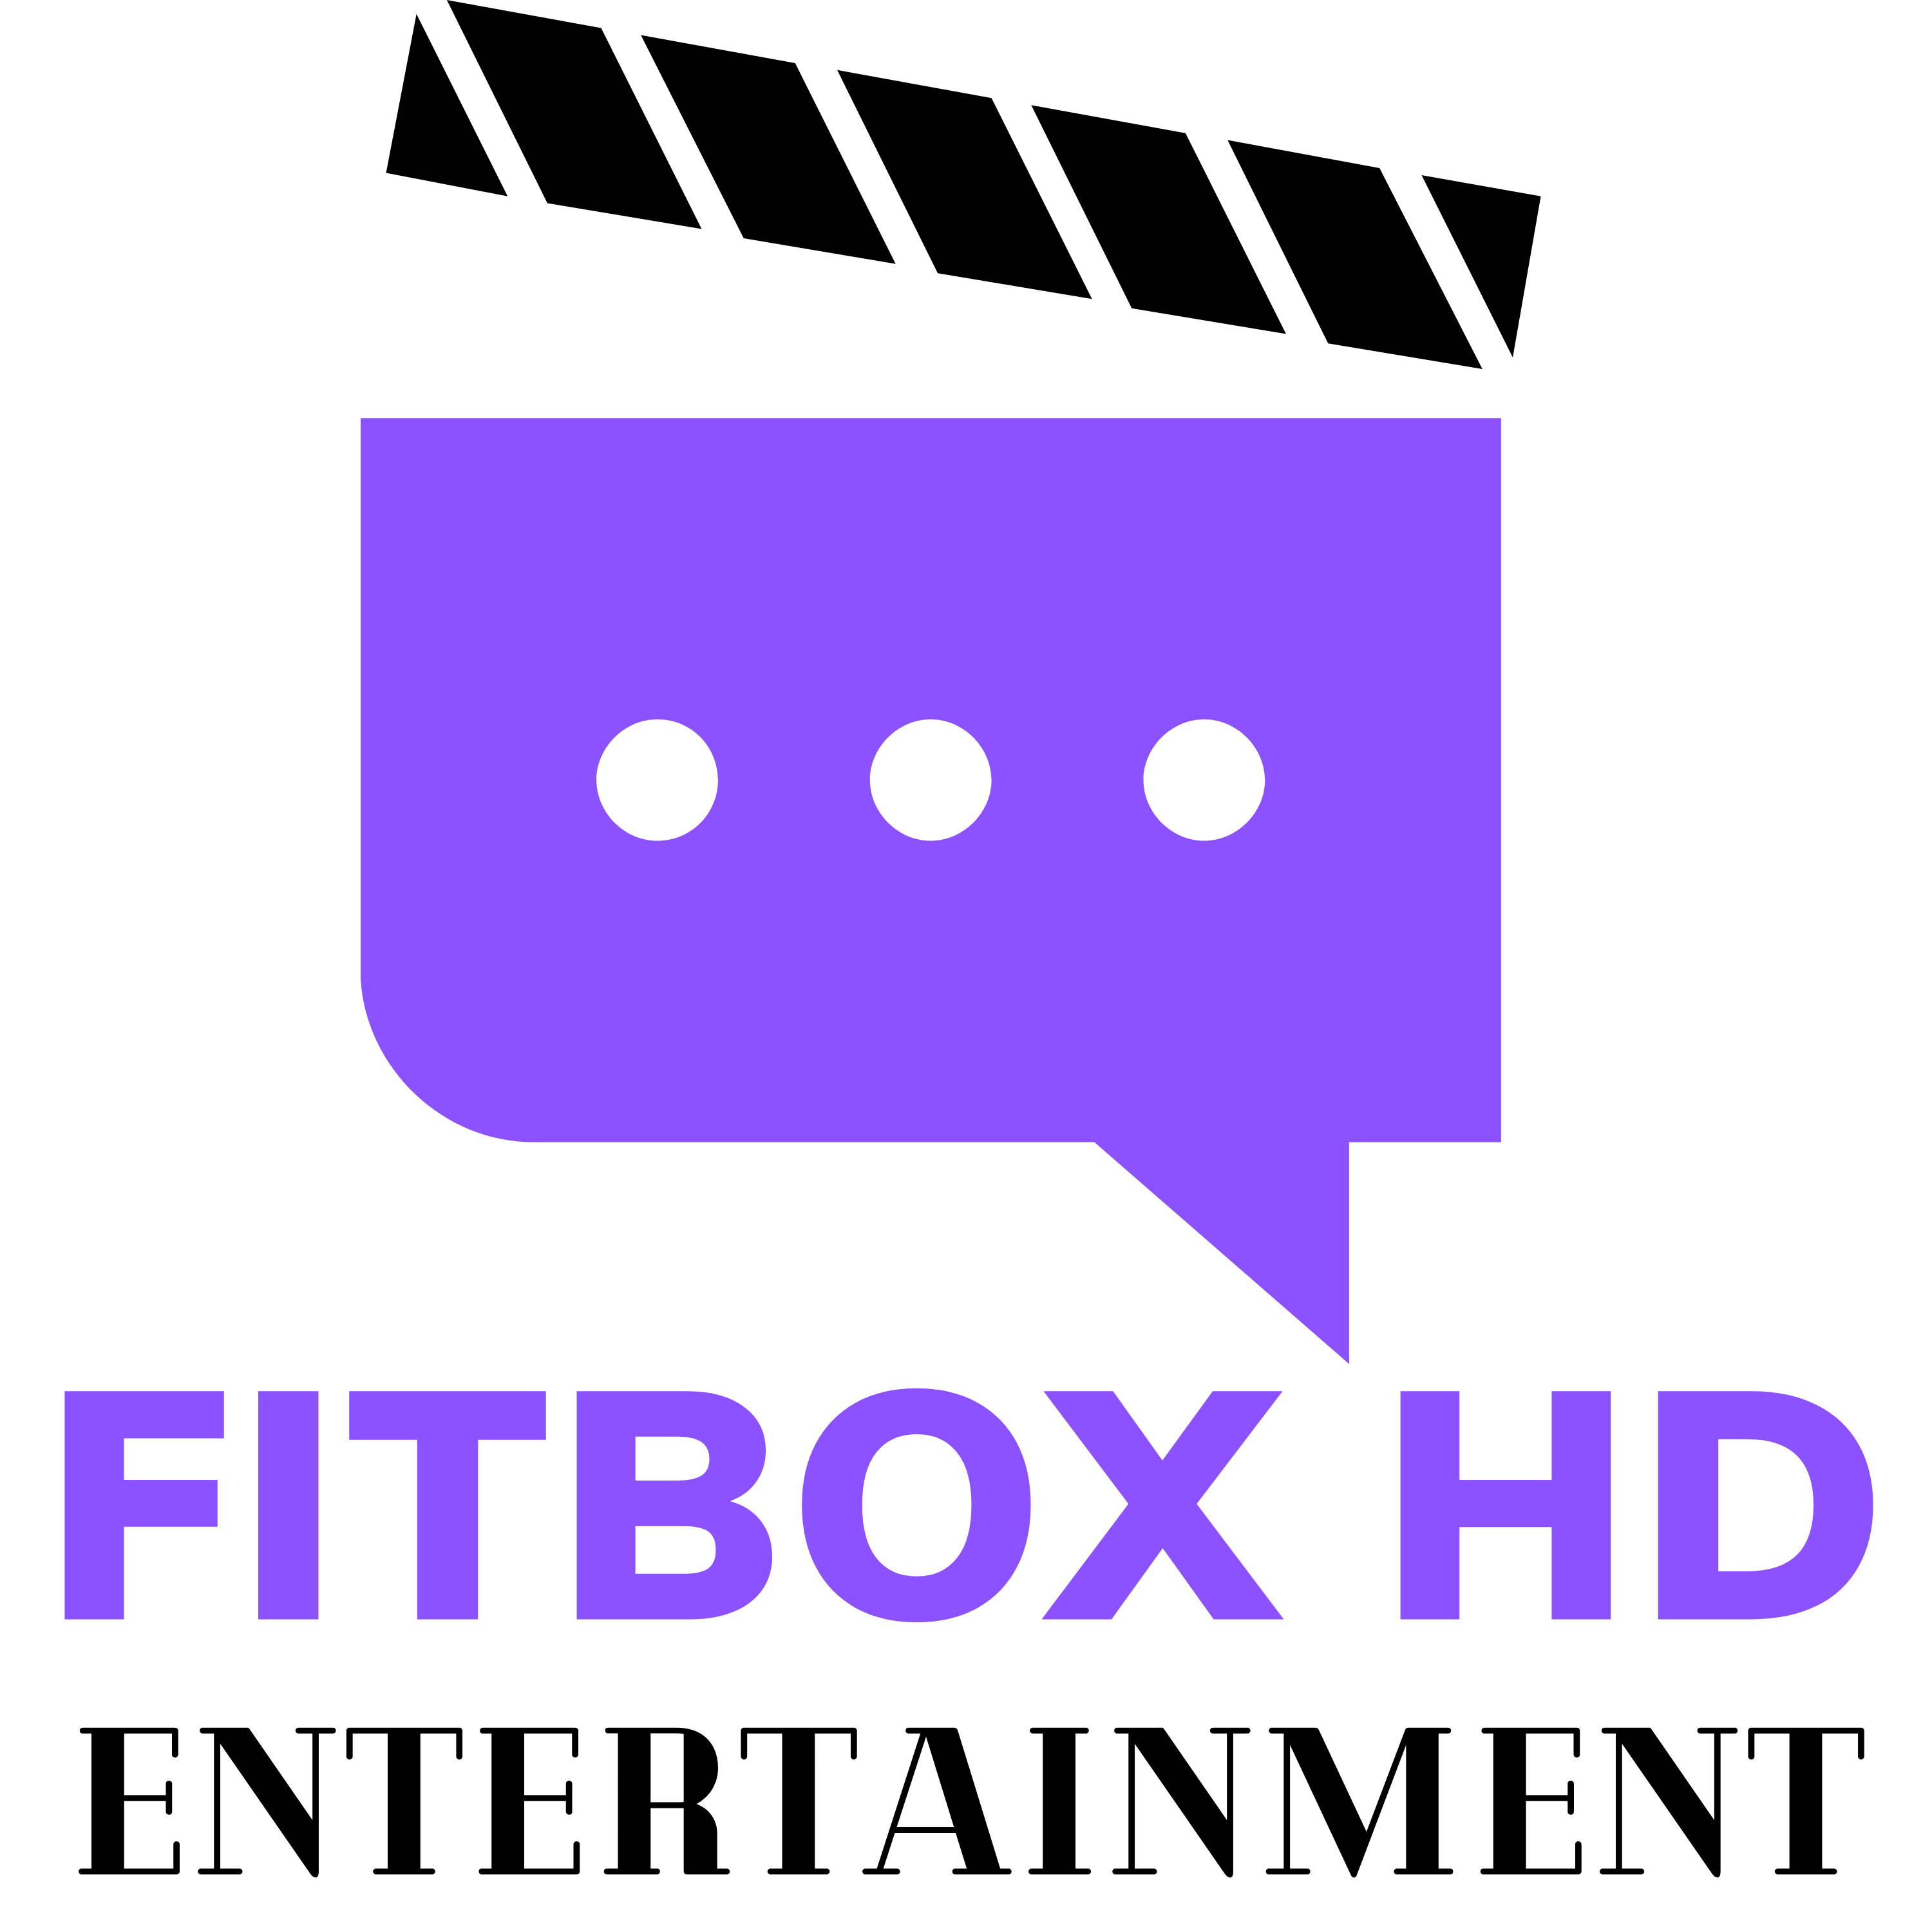 FitBox HD